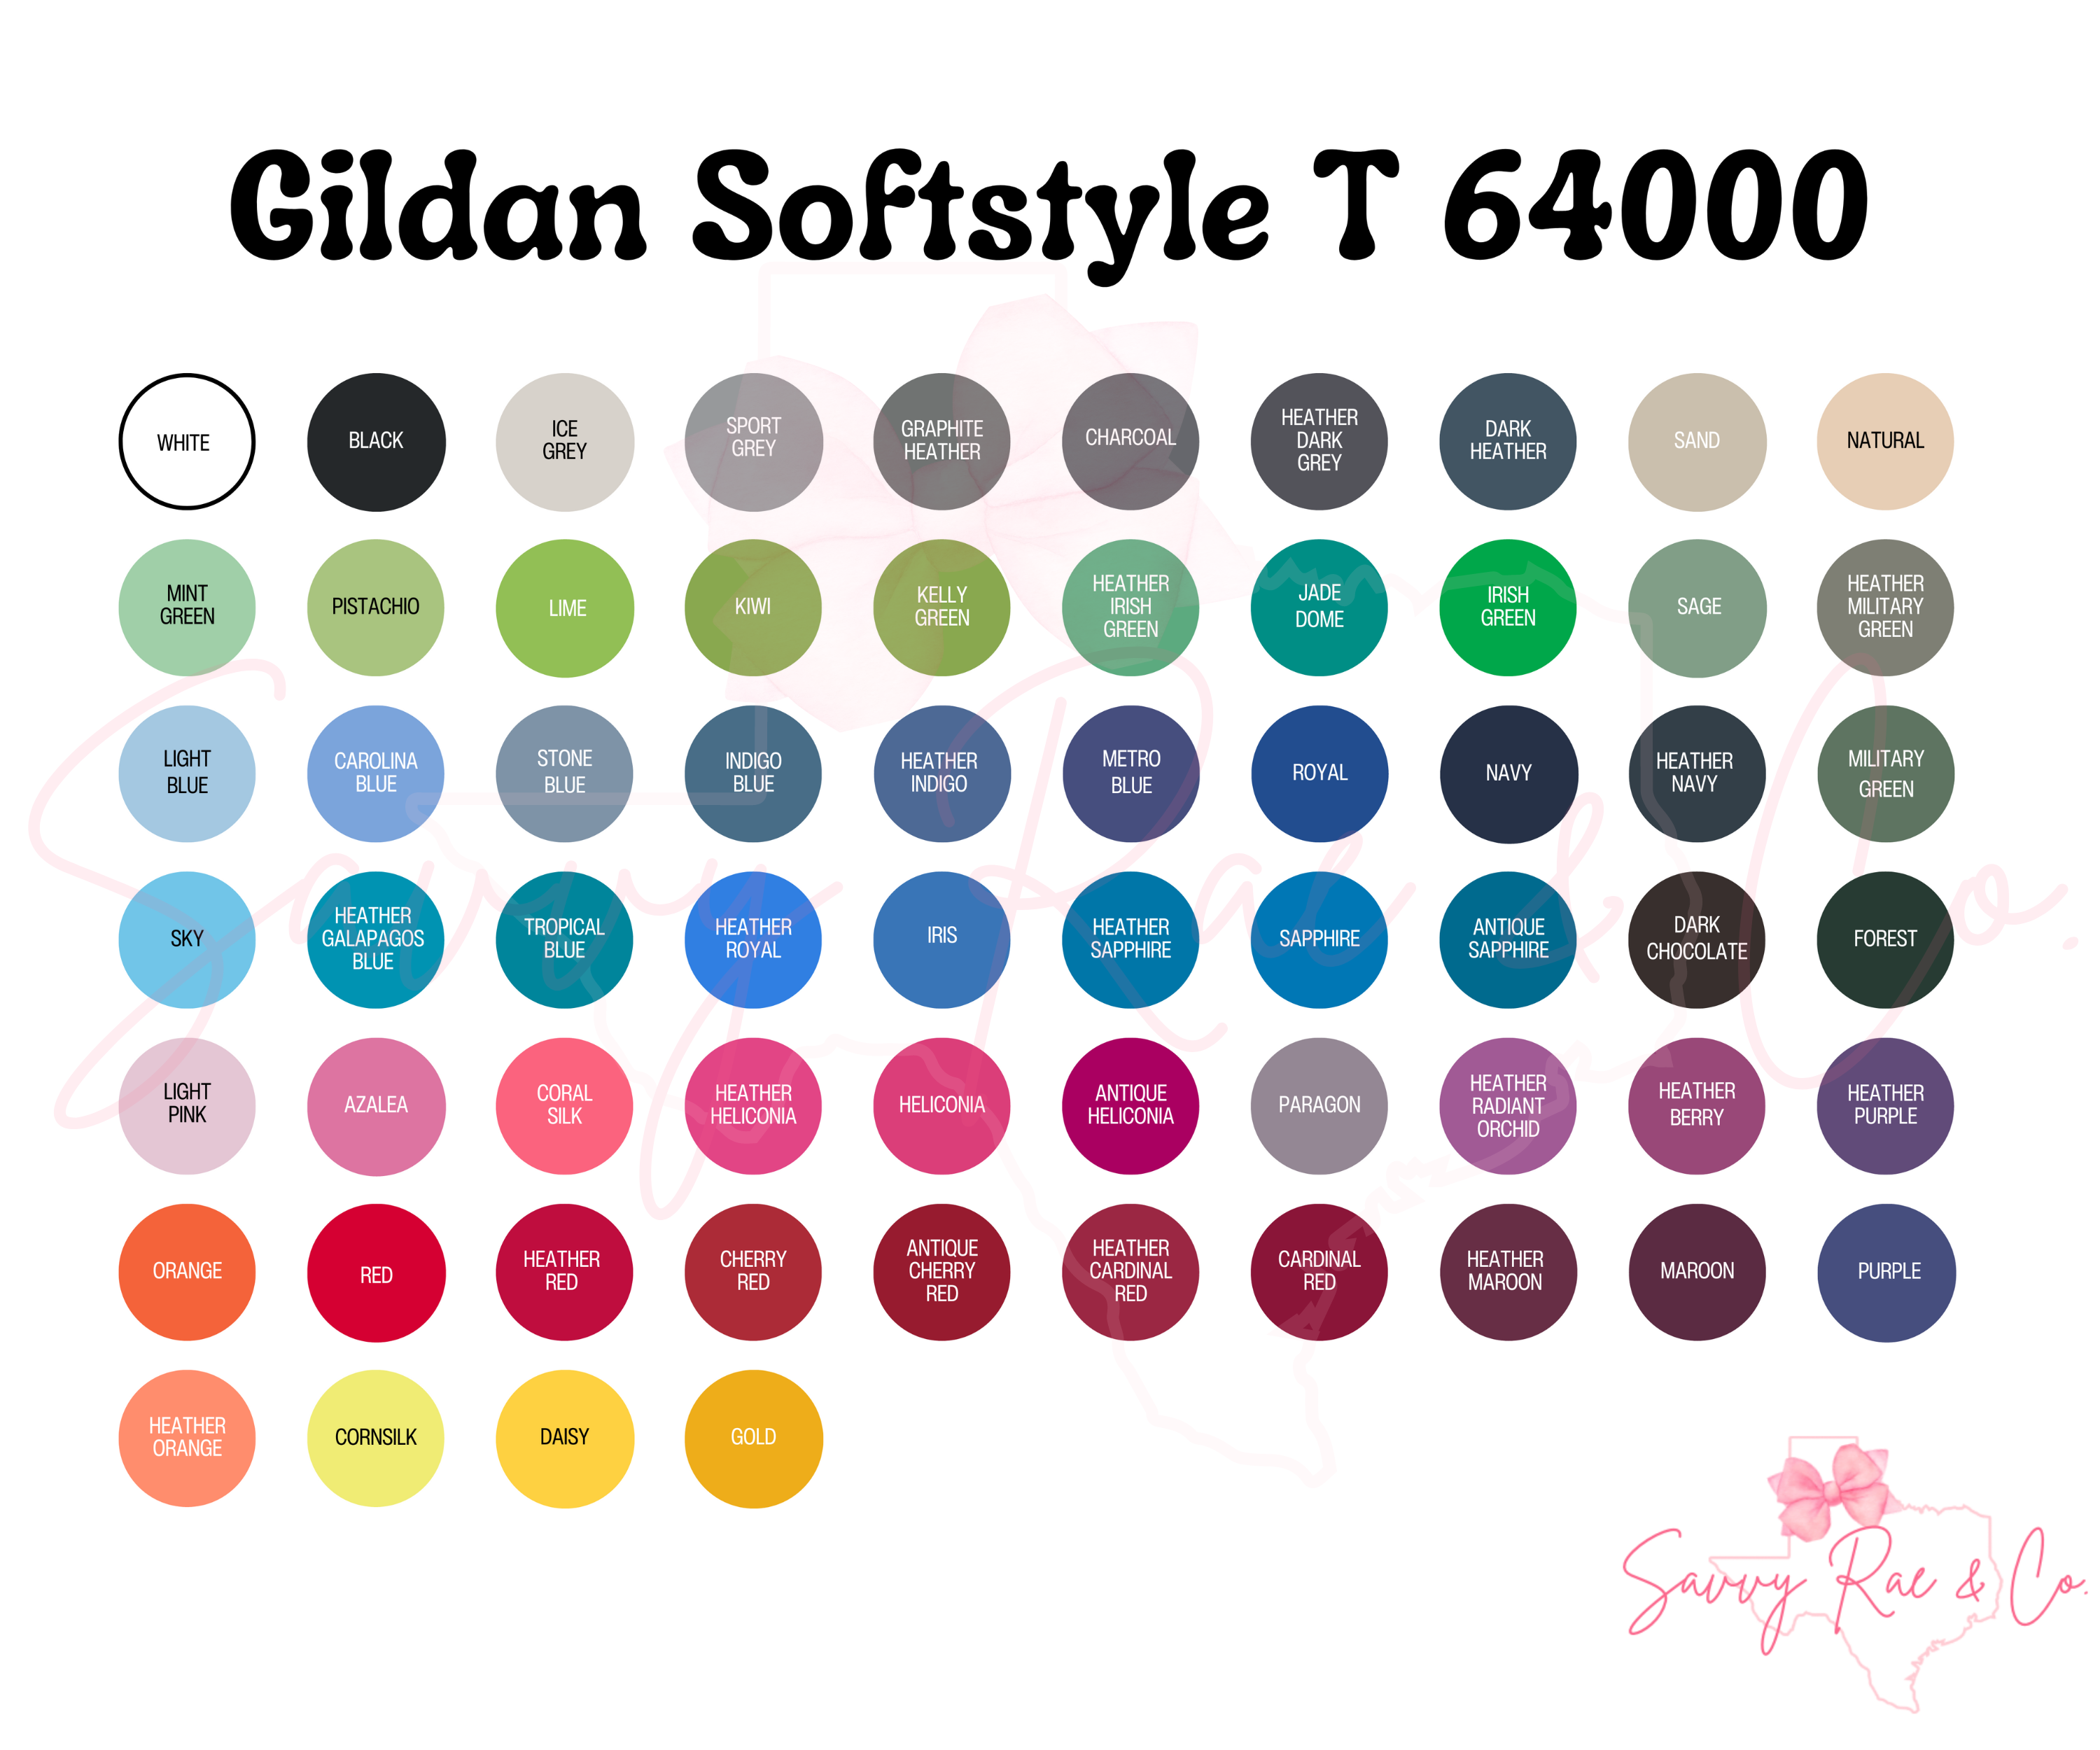 'Life is Better' Gildan Softstyle Shirts